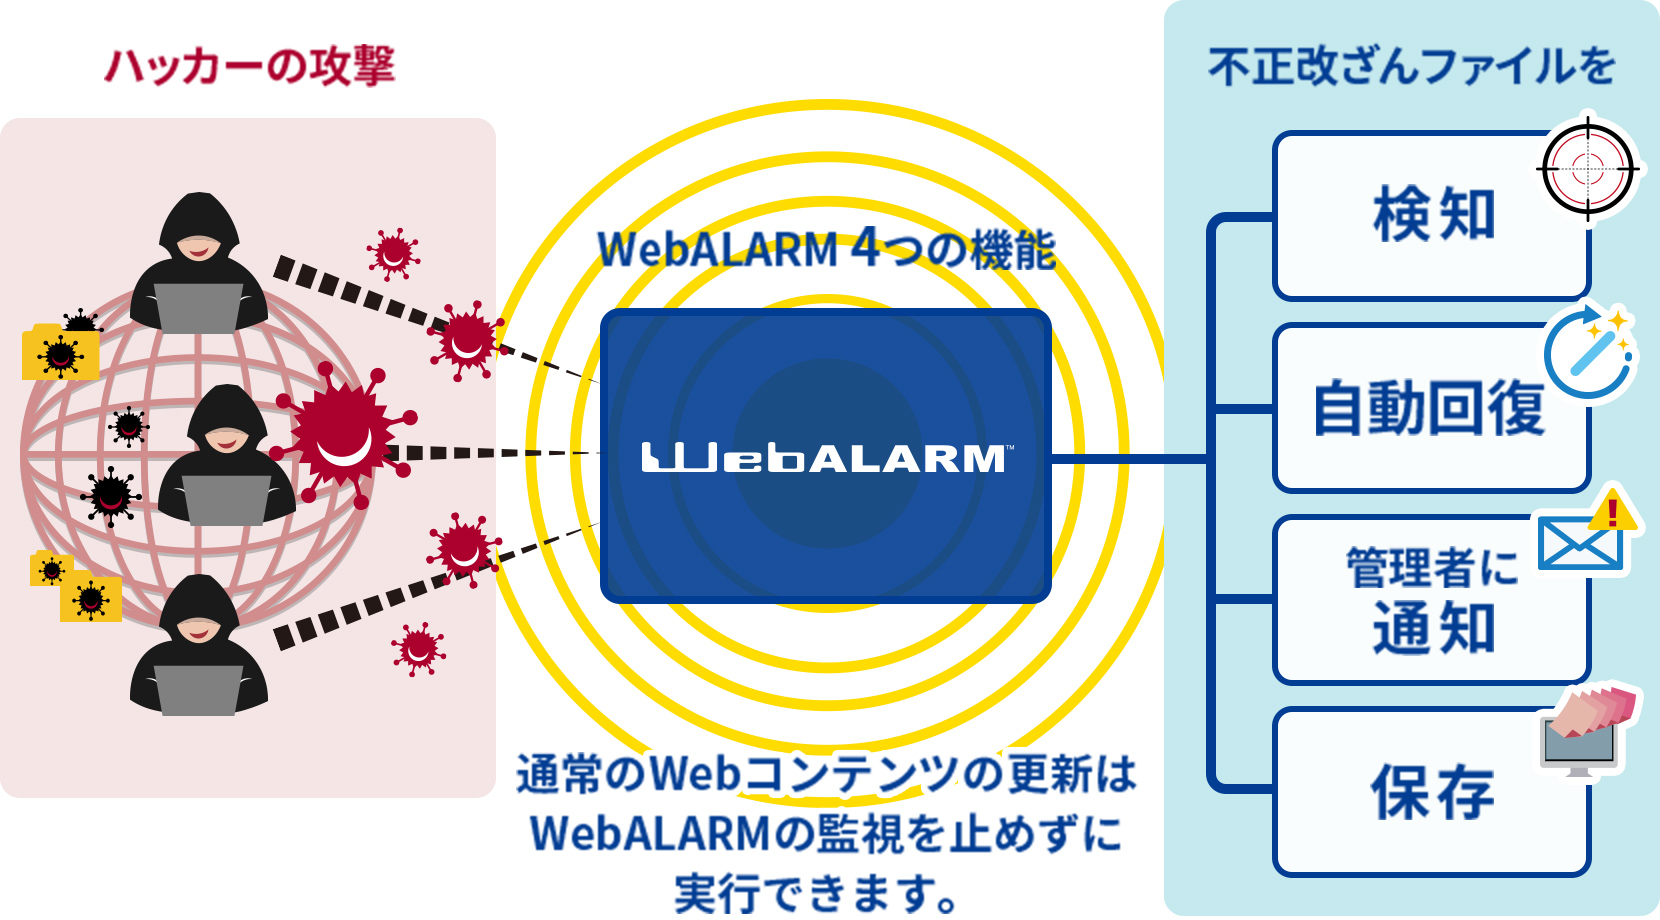 WebALARMの主な特徴